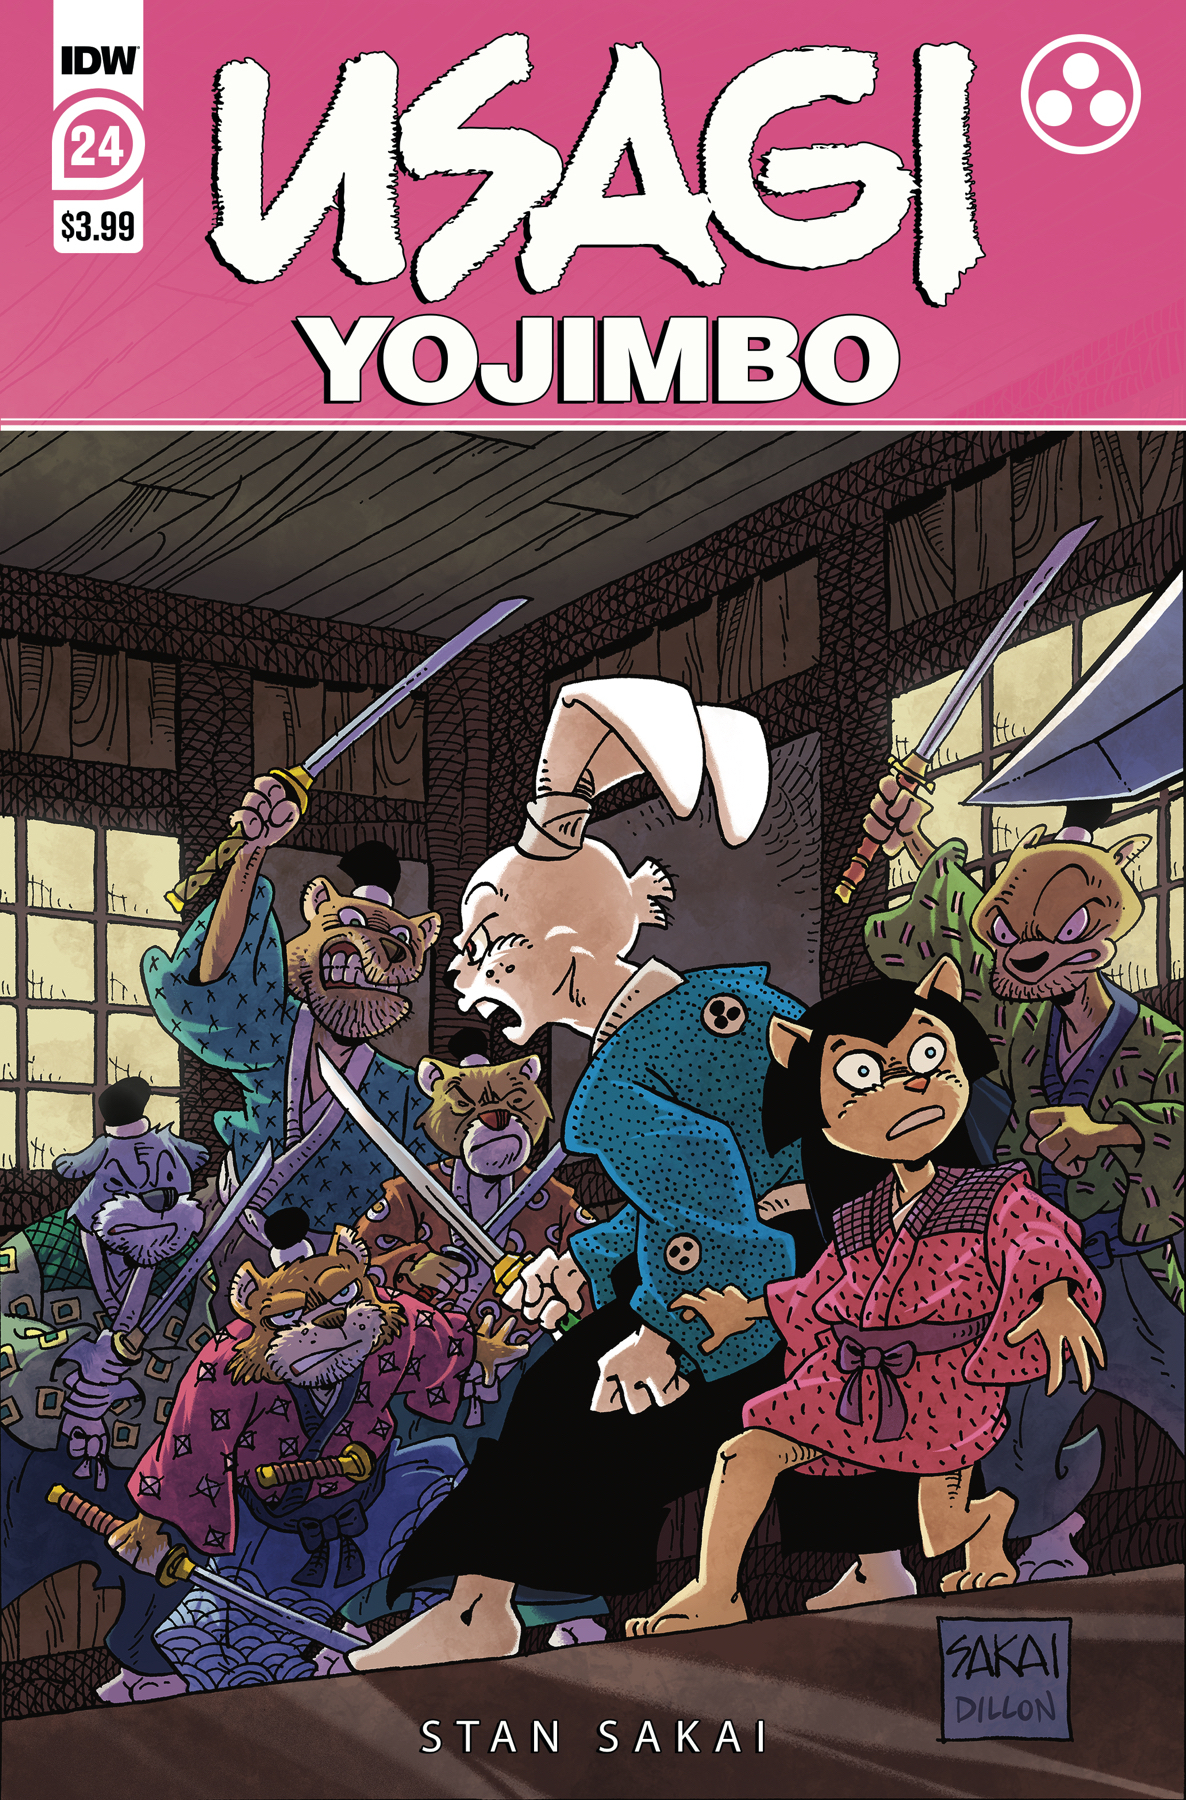 Usagi Yojimbo #24 Cover A Sakai (2019)